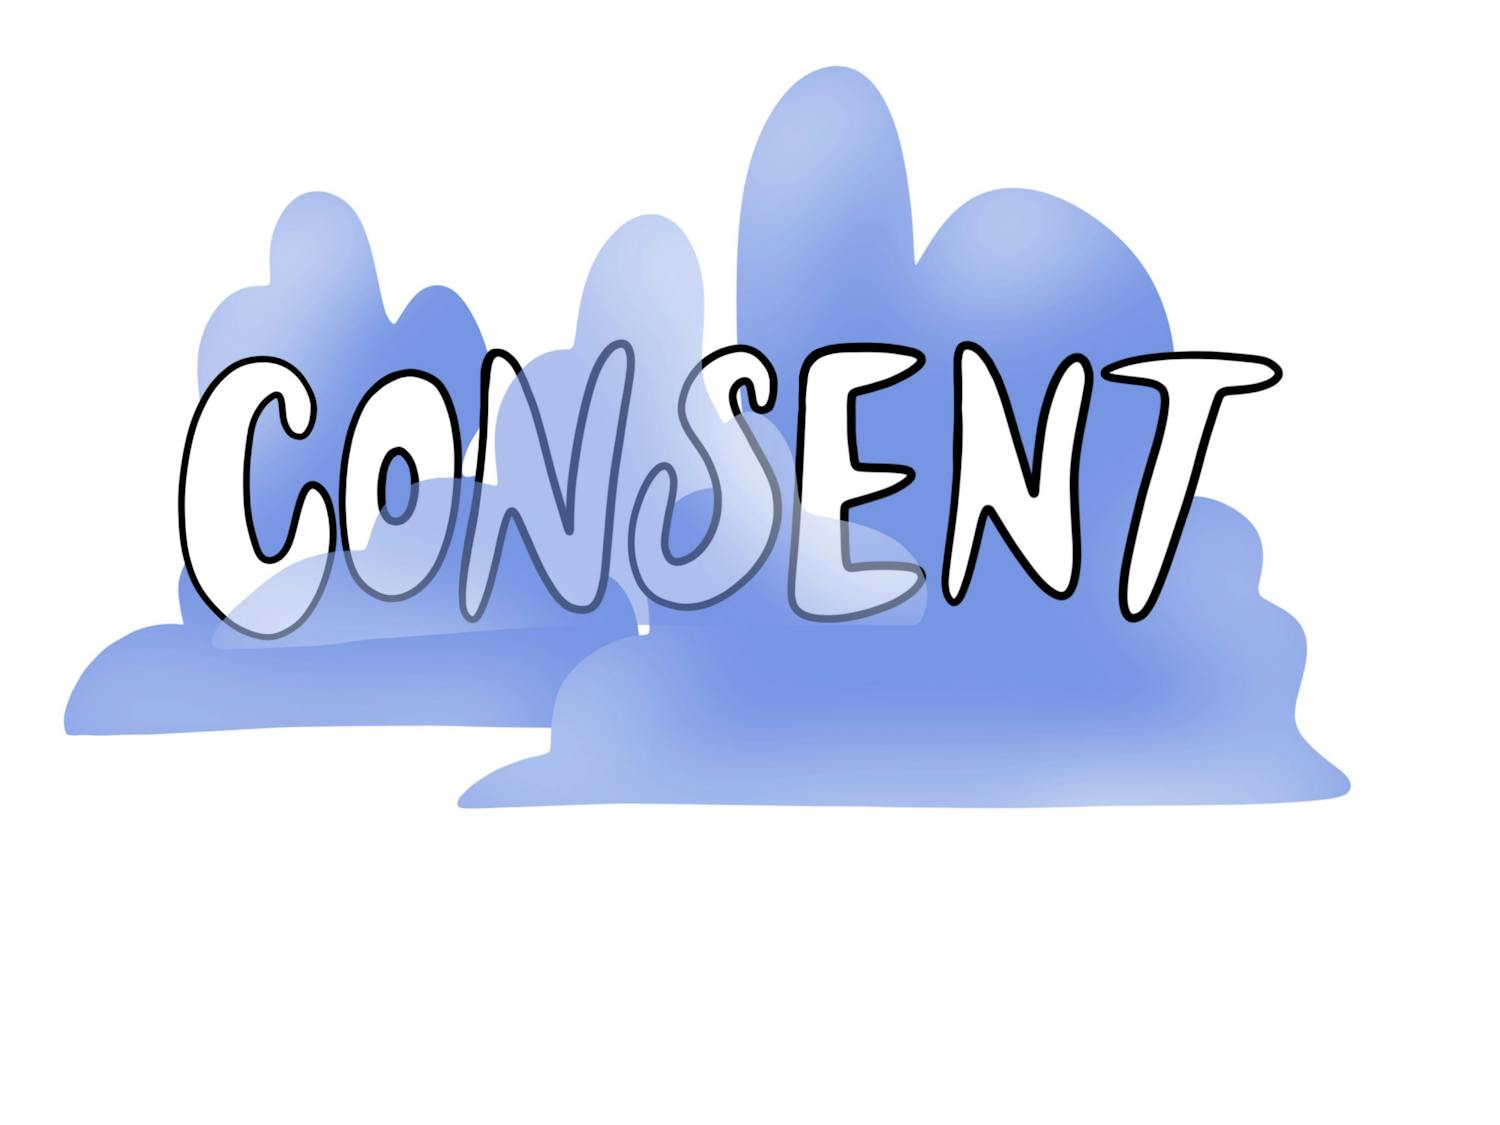 Consent.jpg